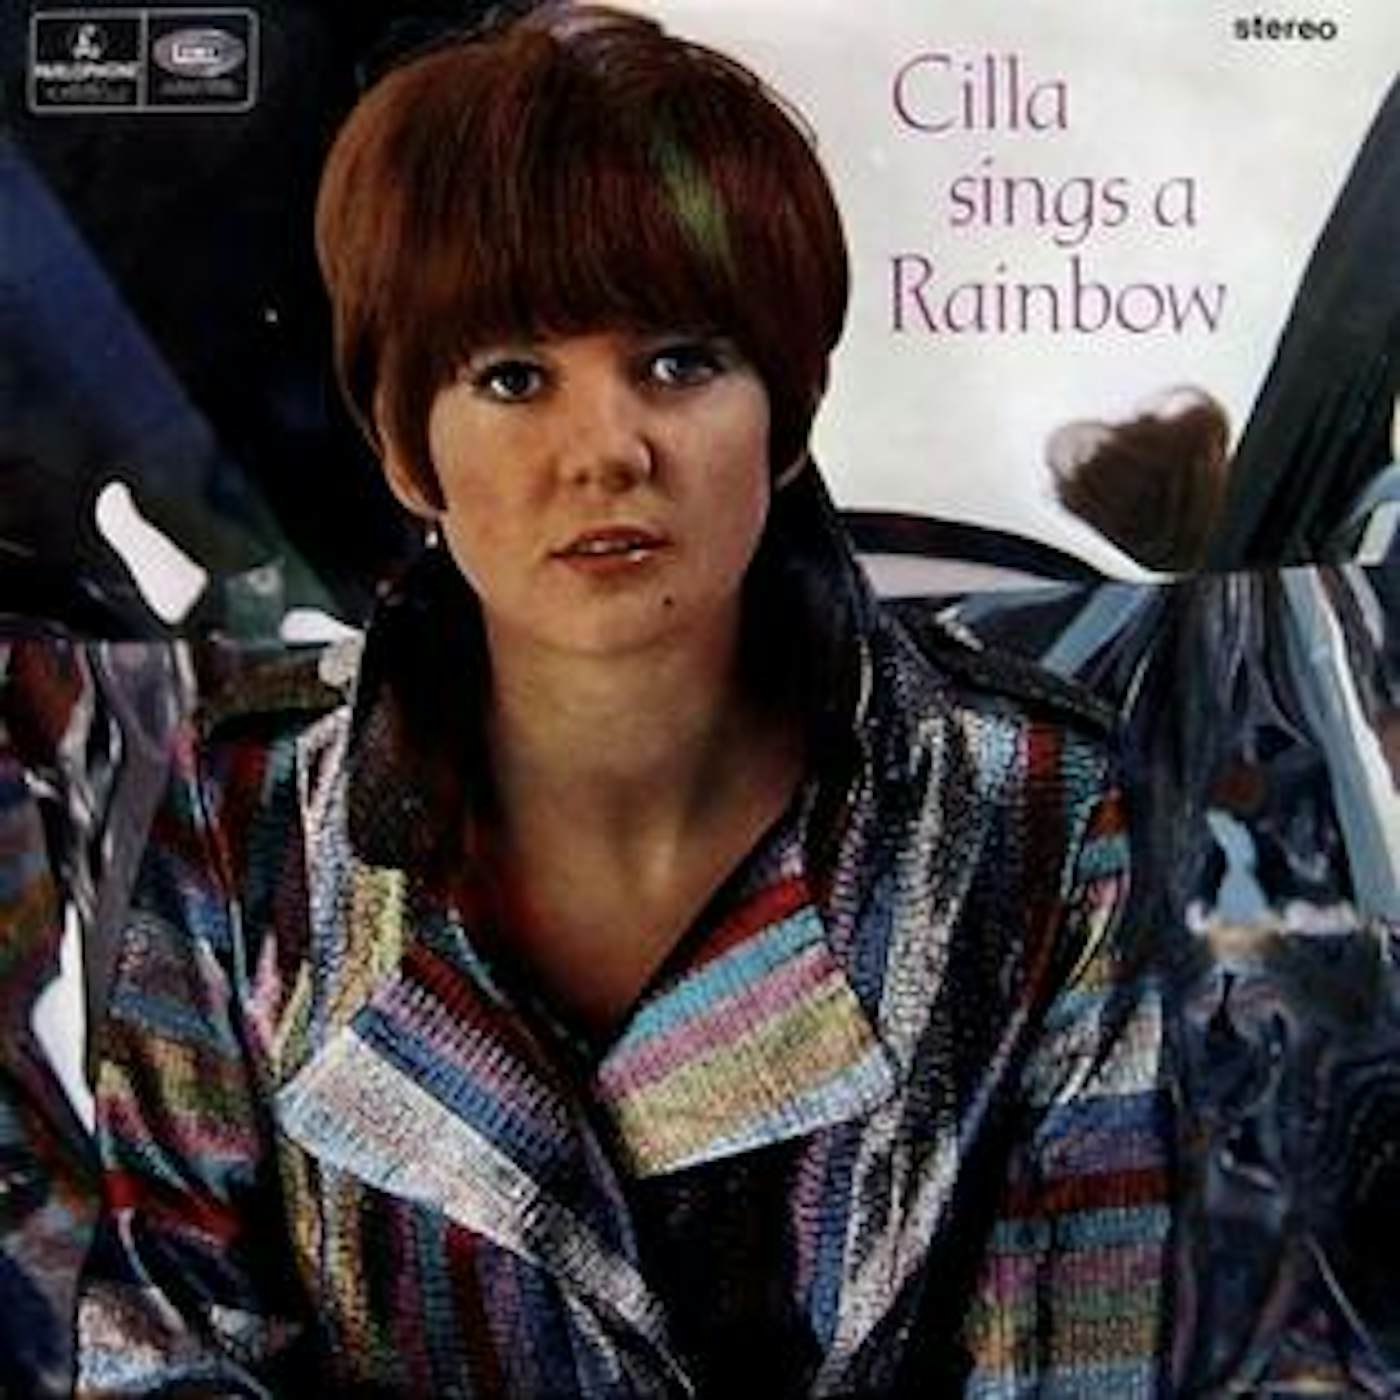 Cilla Black CILLABLACK SINGS A RAINBOW CD